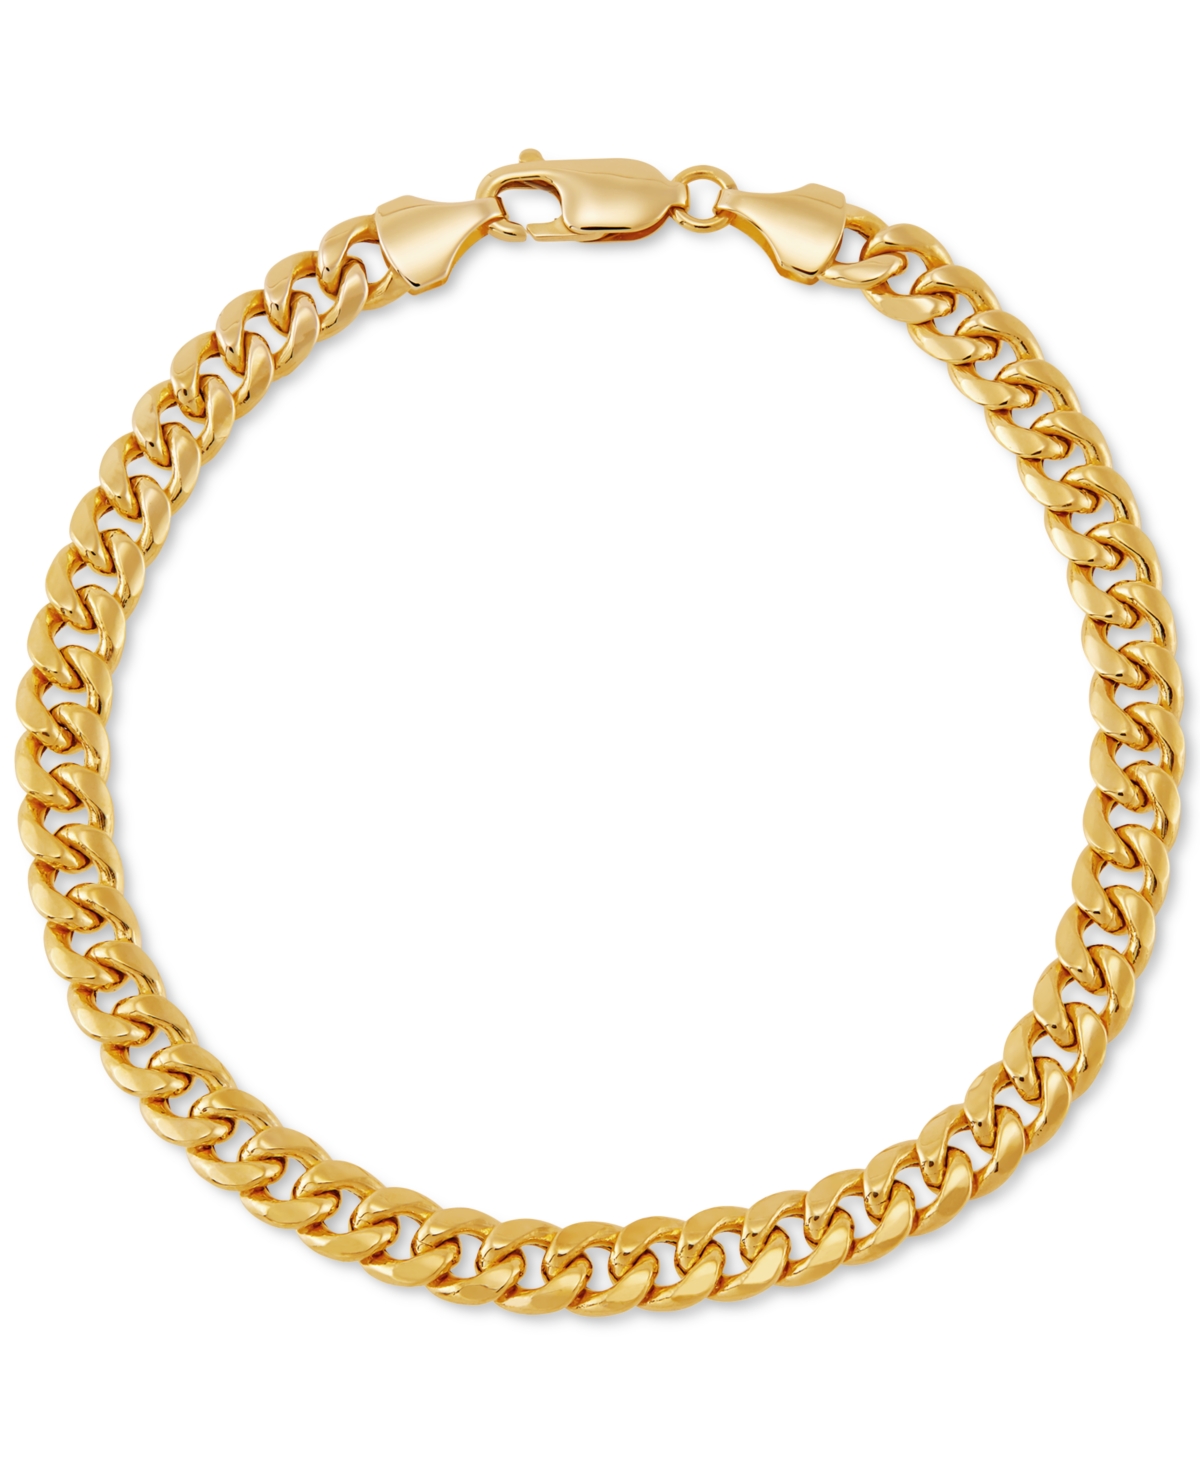 Miami Cuban Chain Bracelet in 10k Gold - Gold